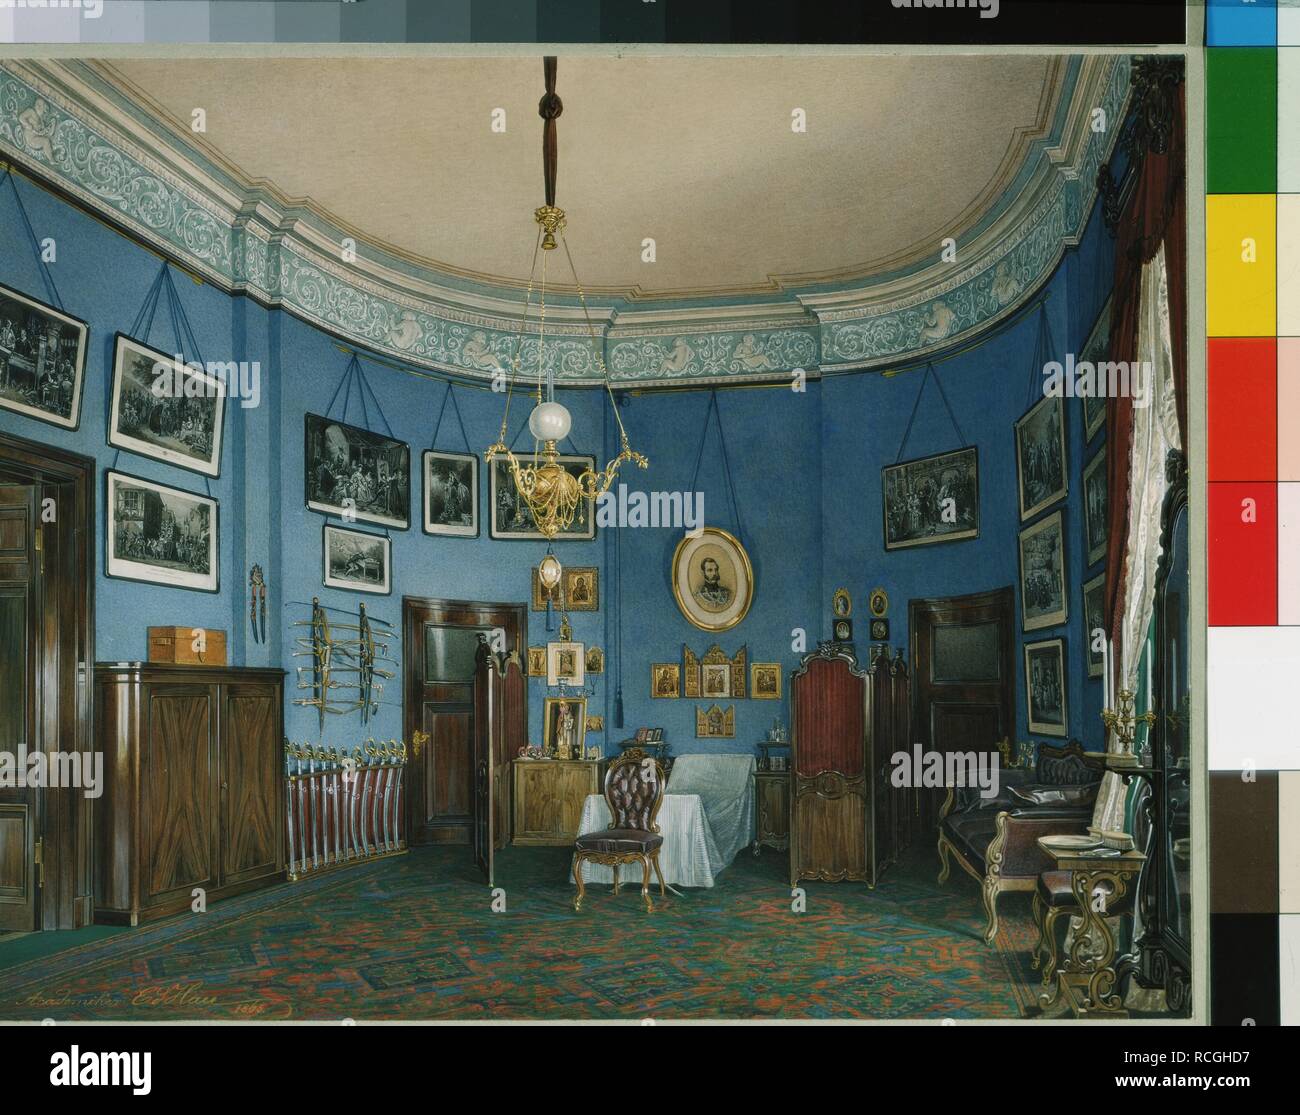 Interiors of the Winter Palace. The Bedroom of Crown Prince Nikolay Aleksandrovich. Museum: State Hermitage, St. Petersburg. Author: HAU, EDUARD. Stock Photo